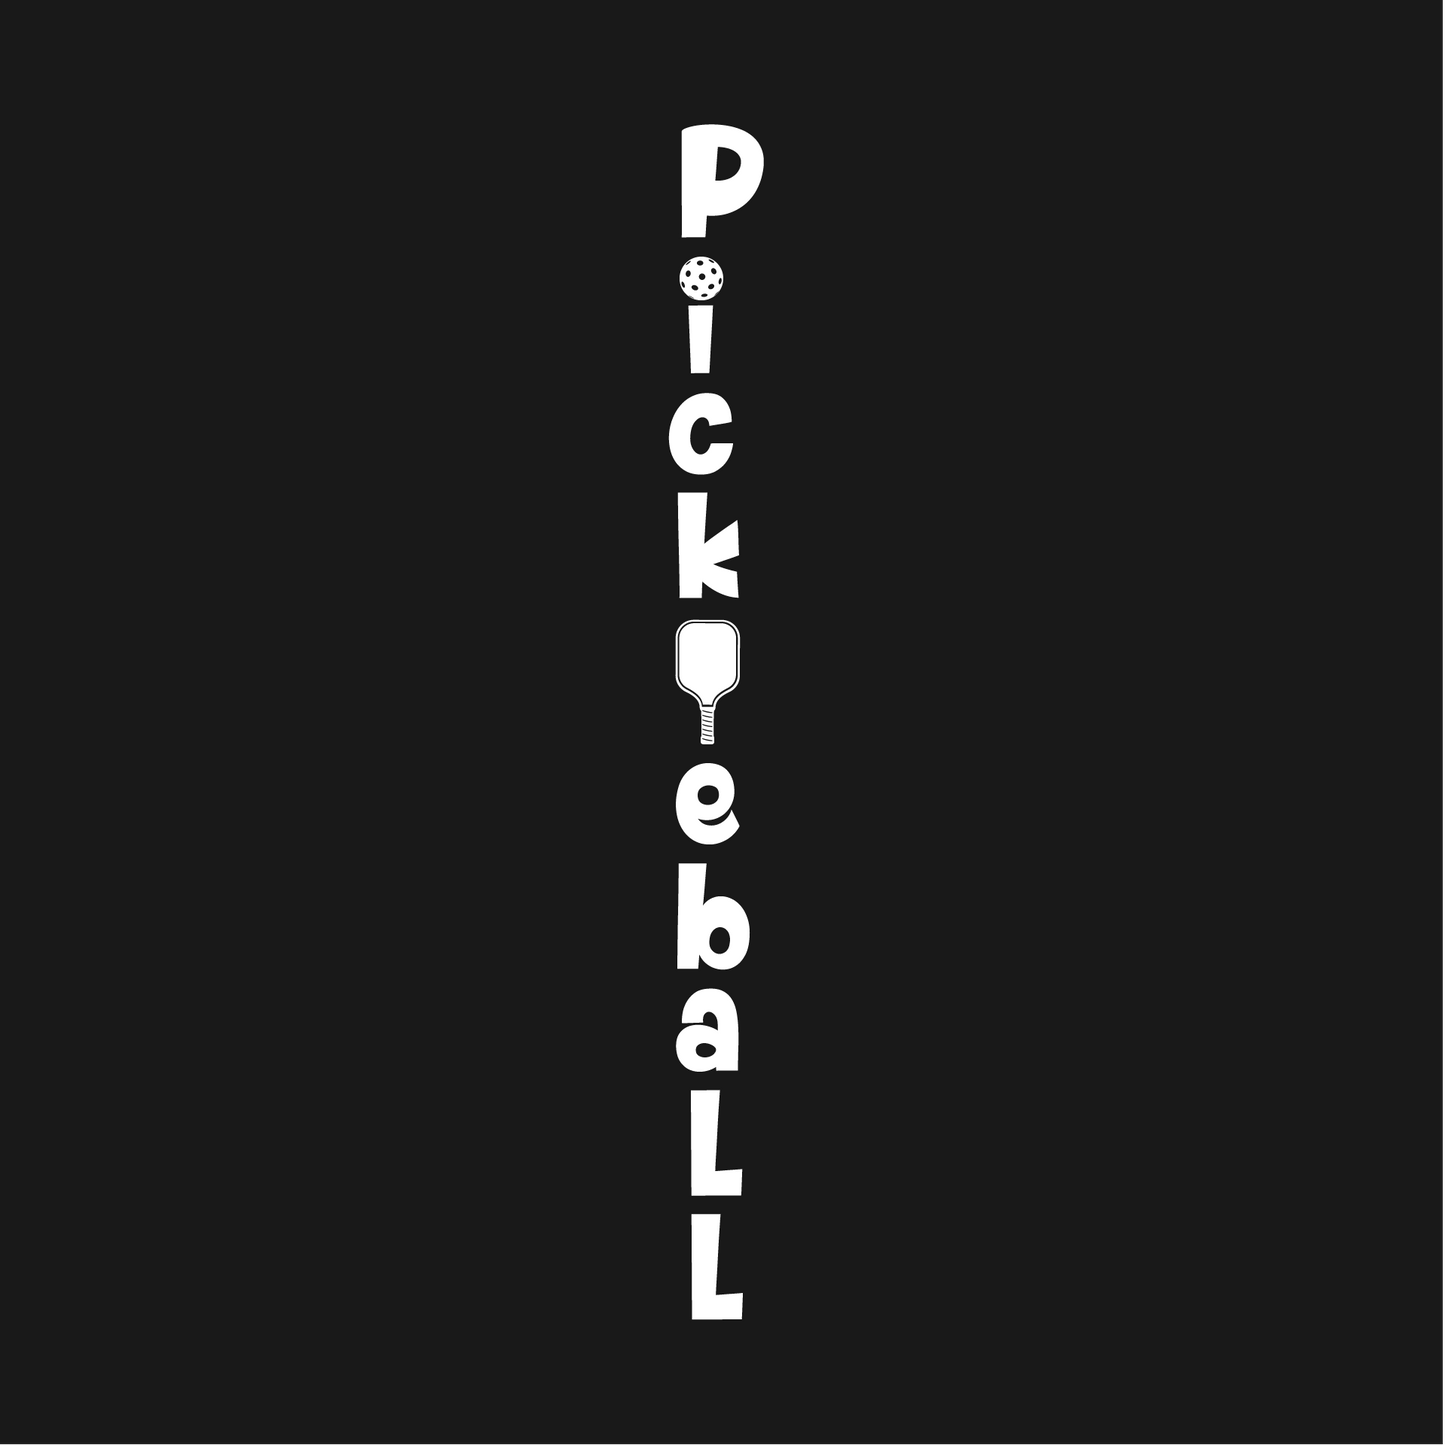 401 Rhode Island Pickleball Club | Women's Long Sleeve Scoop Neck Pickleball Shirts | 75/13/12 poly/cotton/rayon